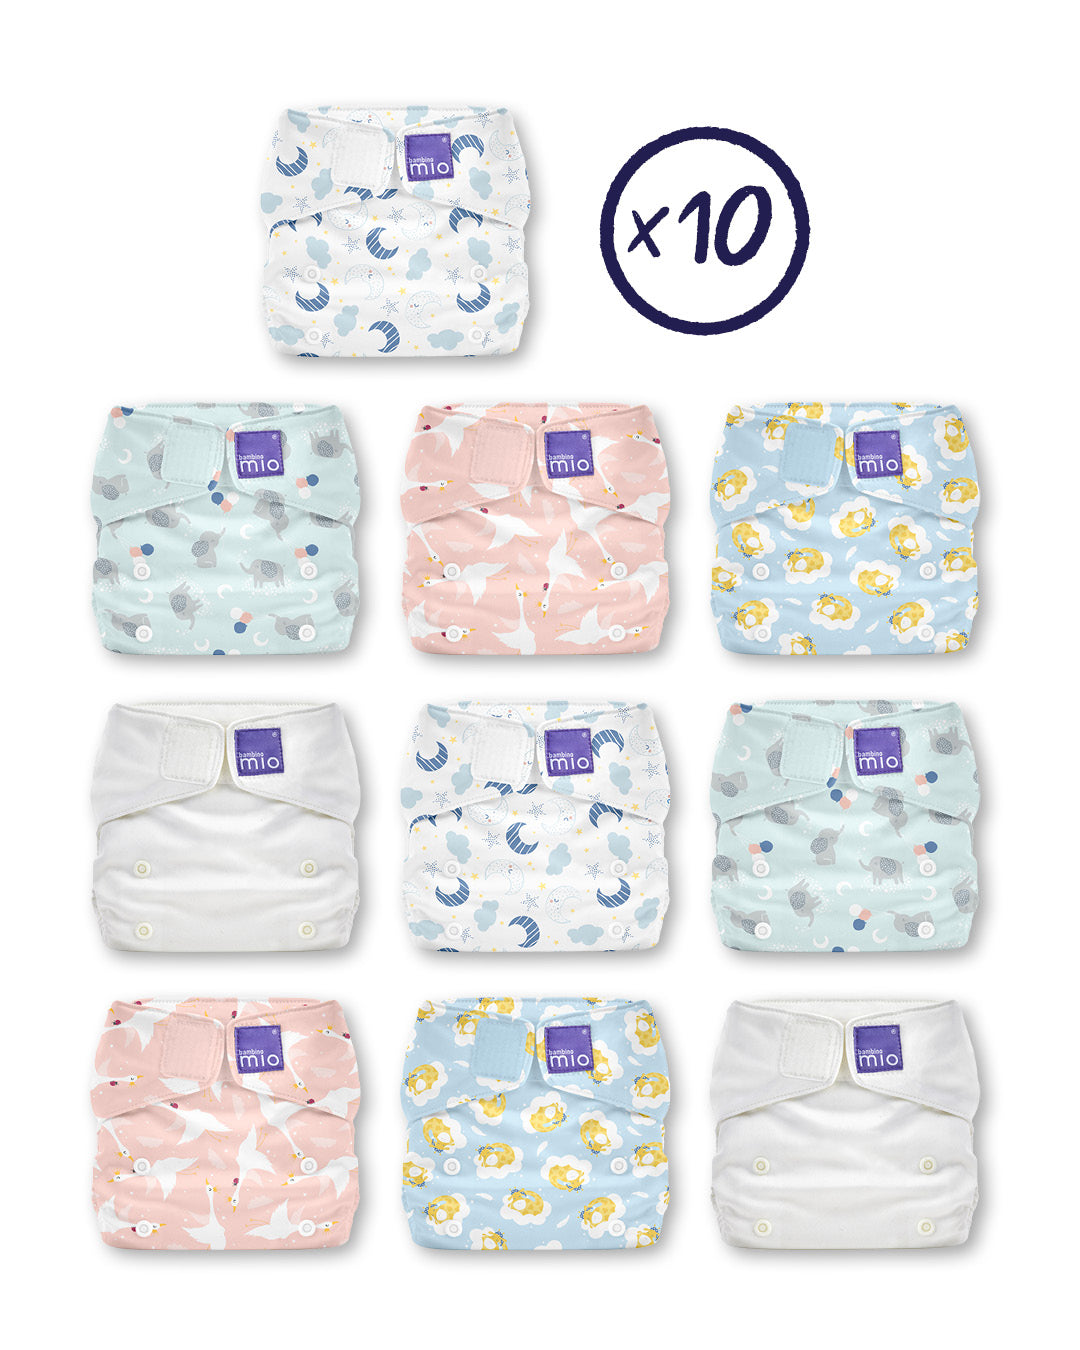 miosolo 10 diaper bundle